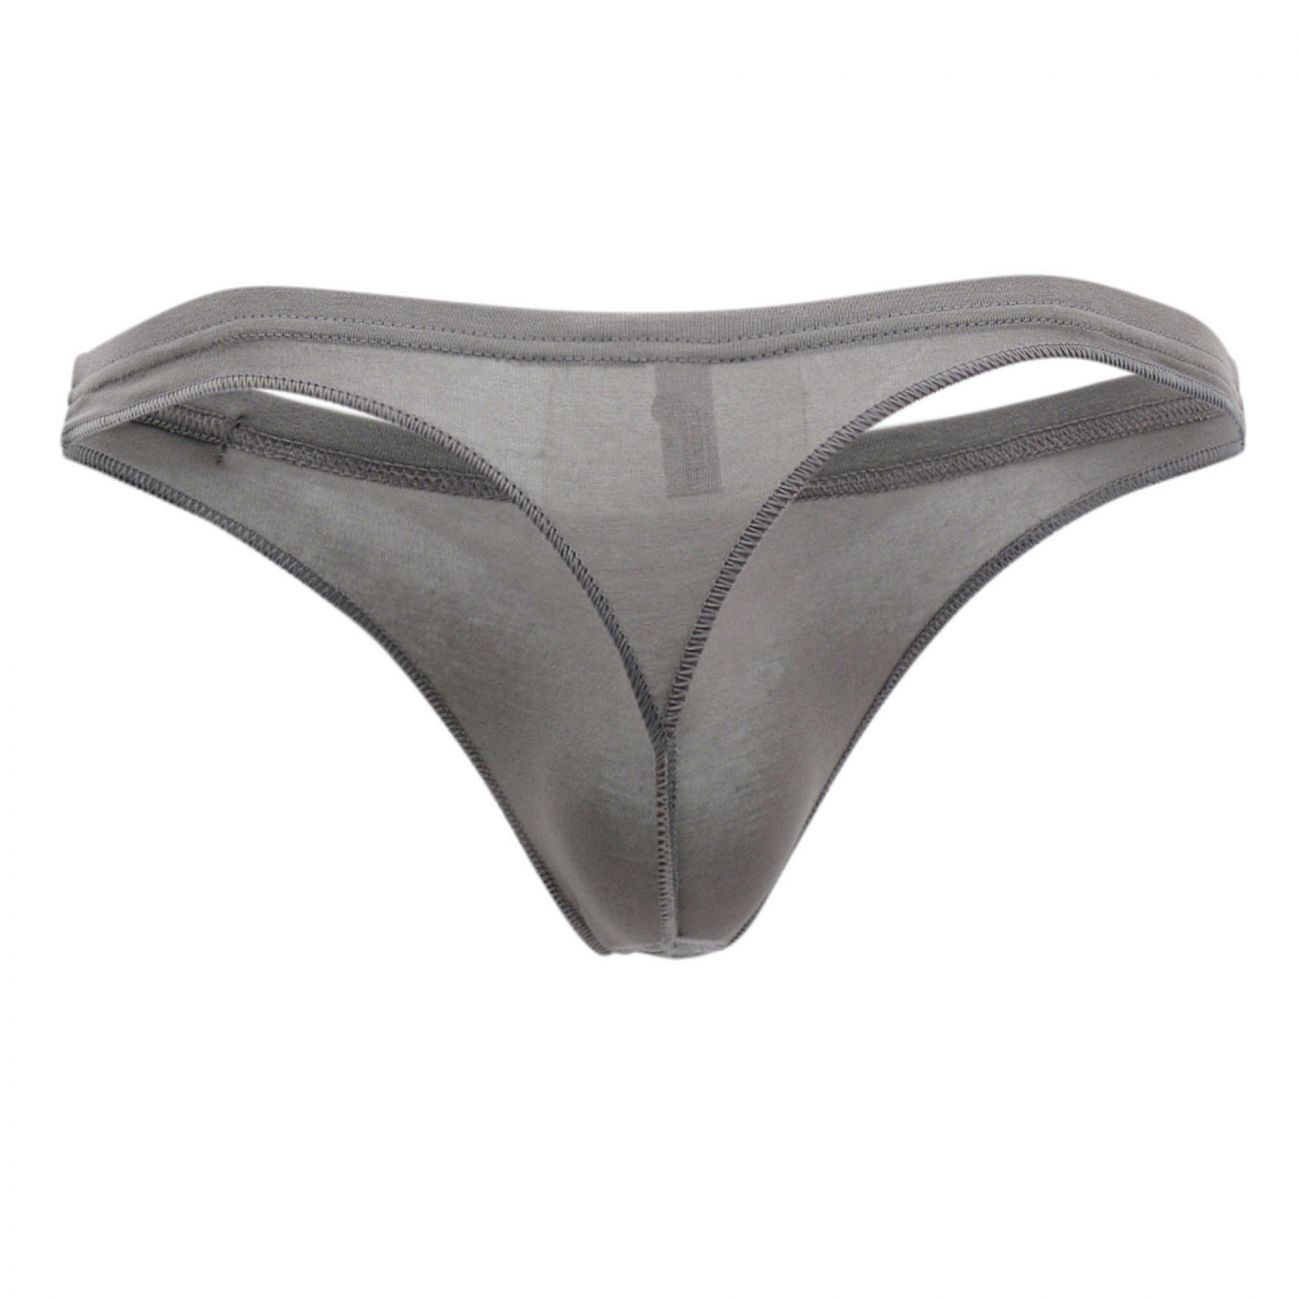 Underwear: Doreanse 1392-SMK Euro Thong | eBay